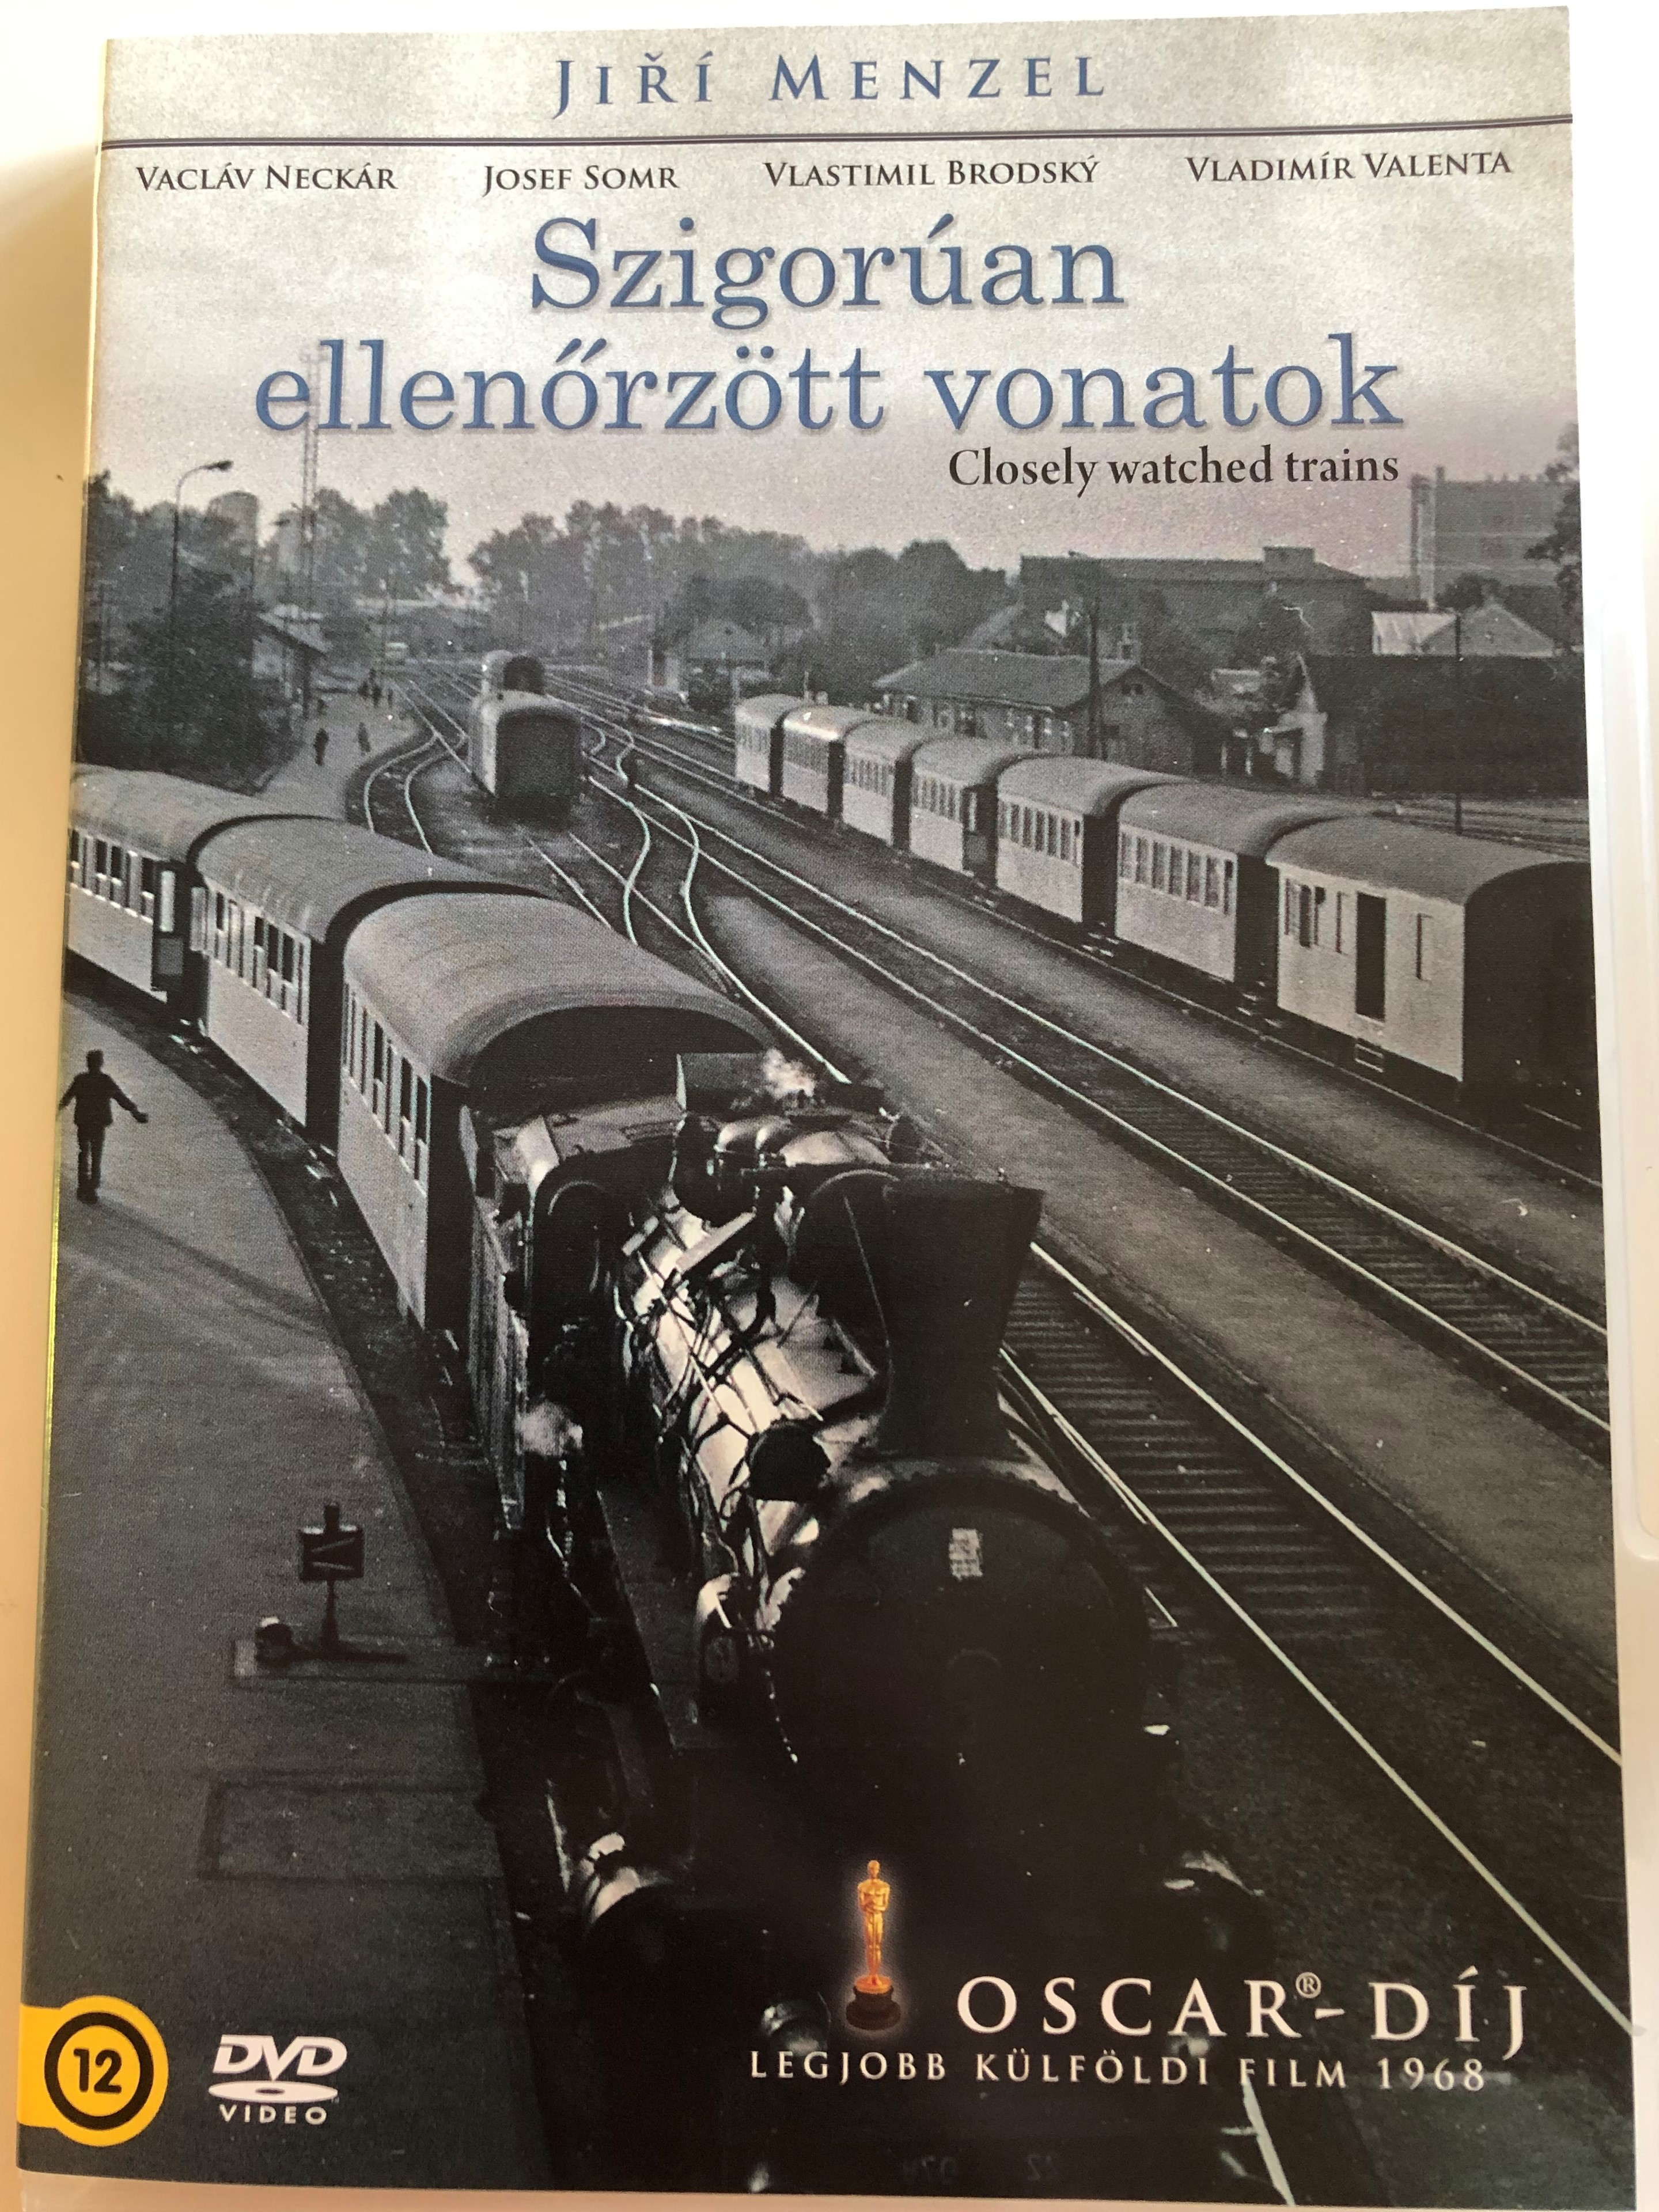 closely-watched-trains-ost-e-sledovan-vlaky-dvd-1966-szigor-an-ellen-rz-tt-vonatok-1.jpg